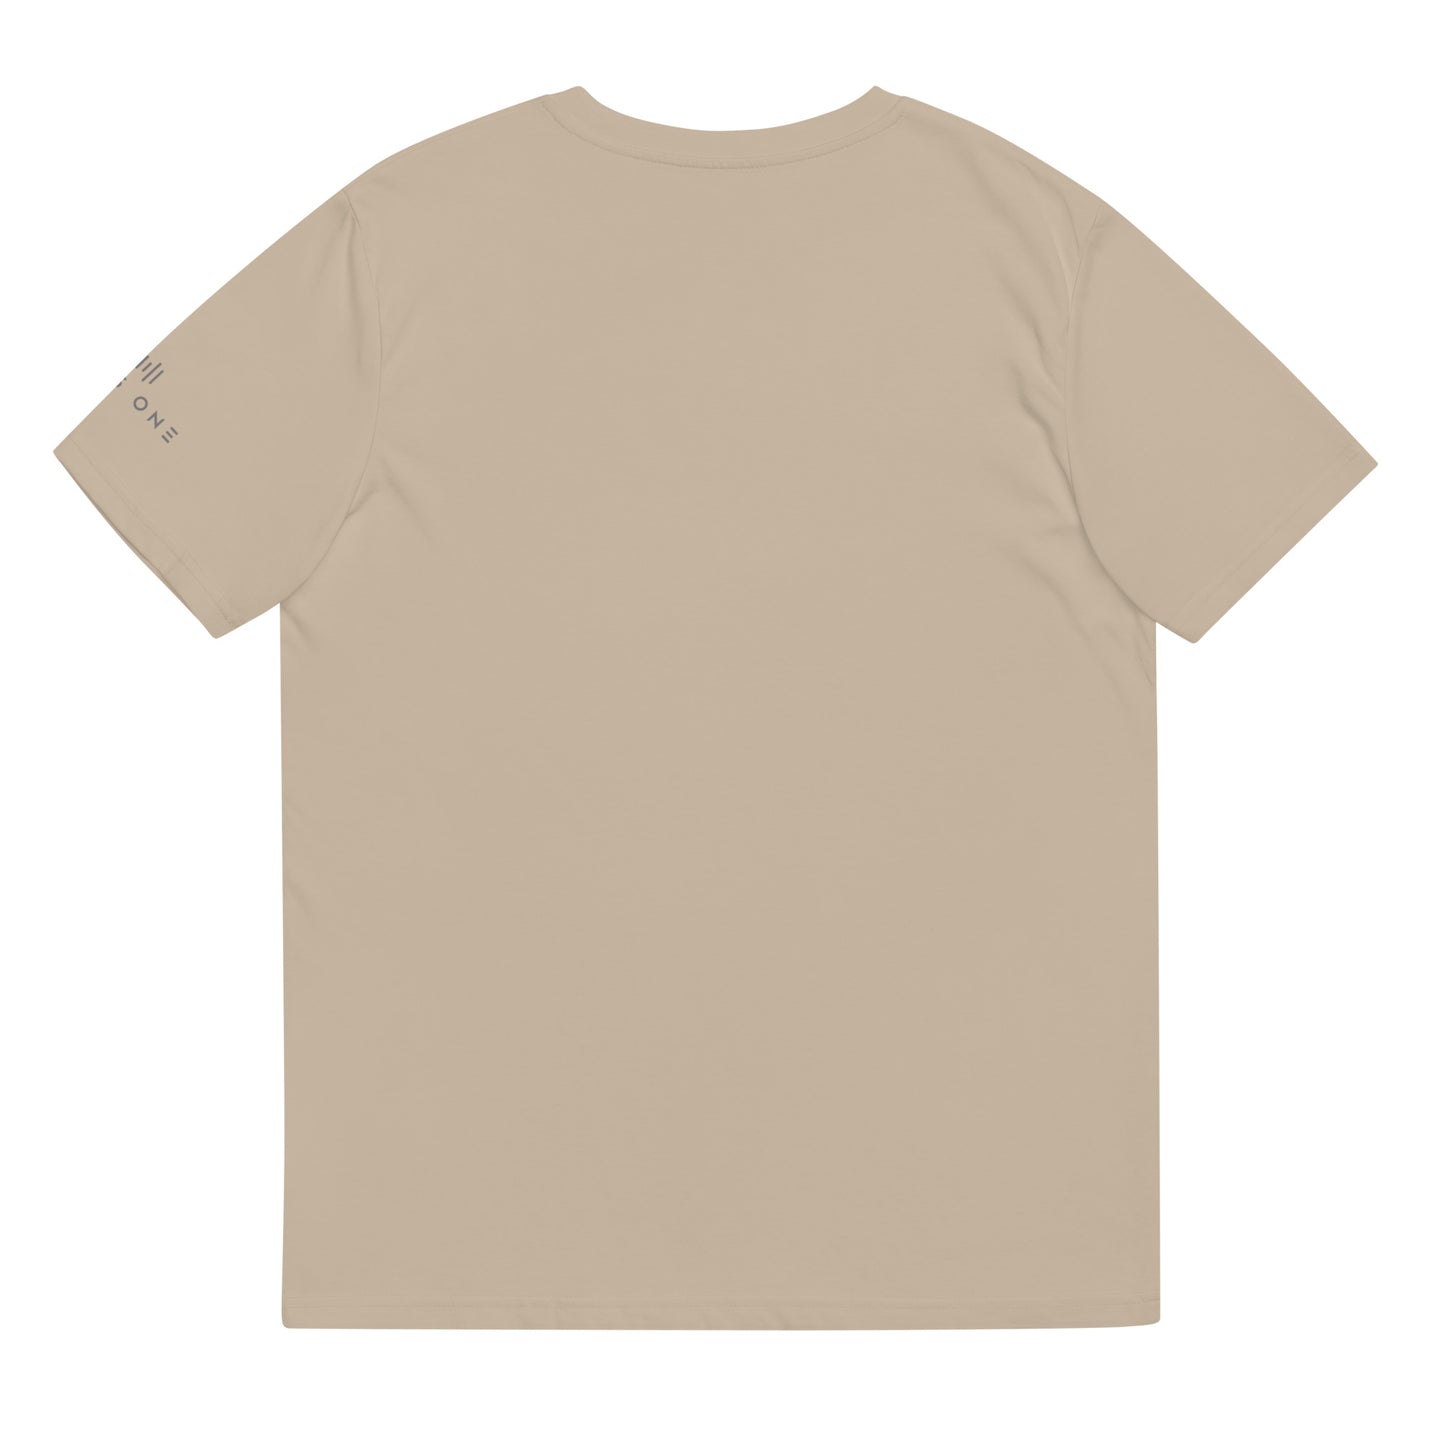 SK8 (v6) Unisex organic cotton t-shirt